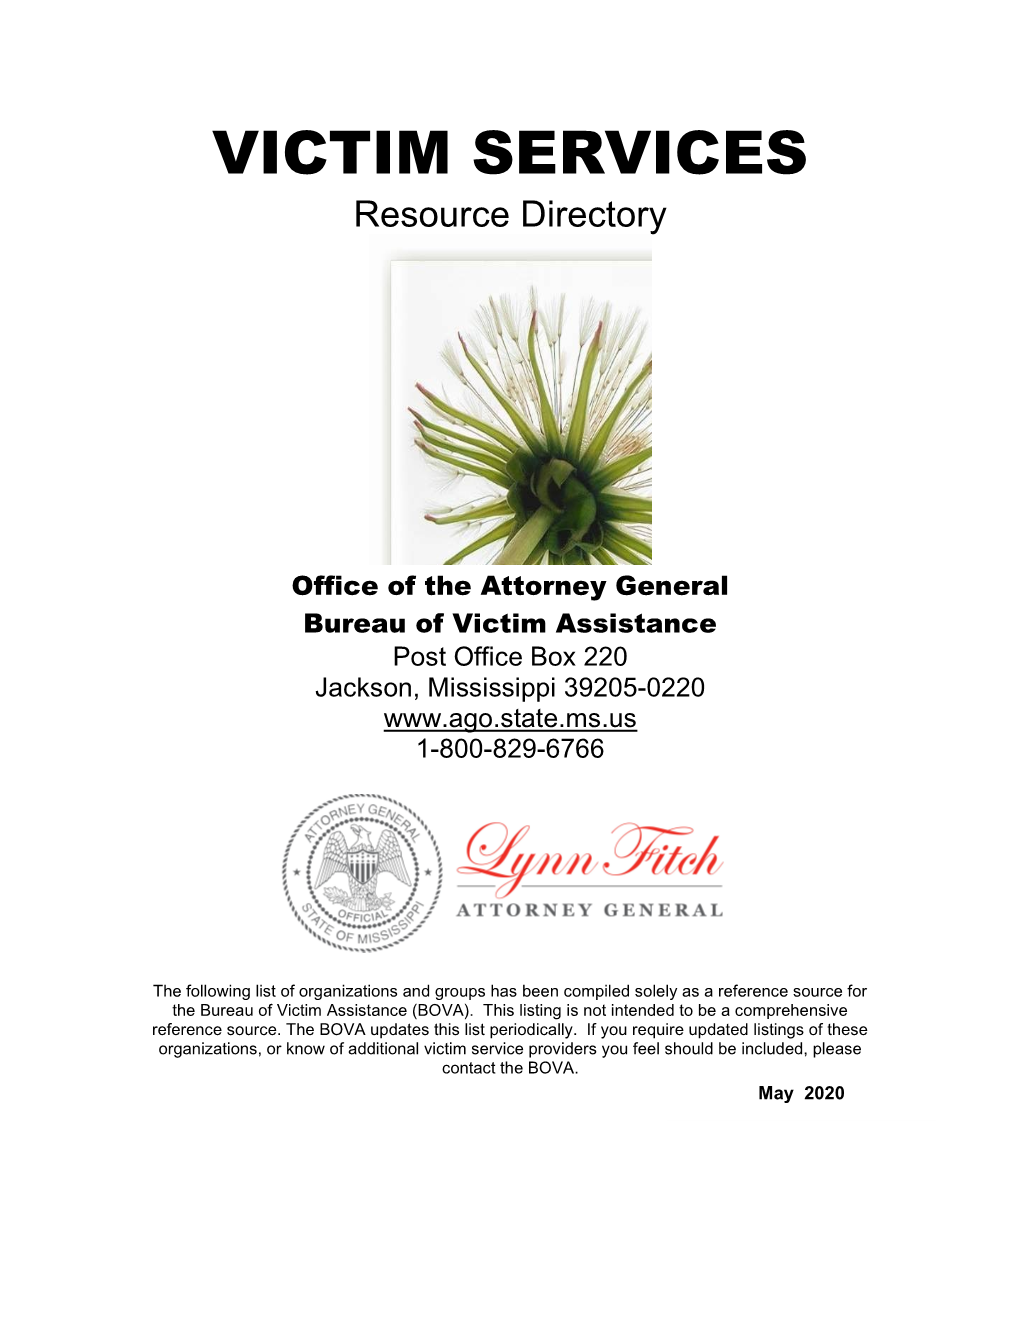 VICTIM SERVICES Resource Directory